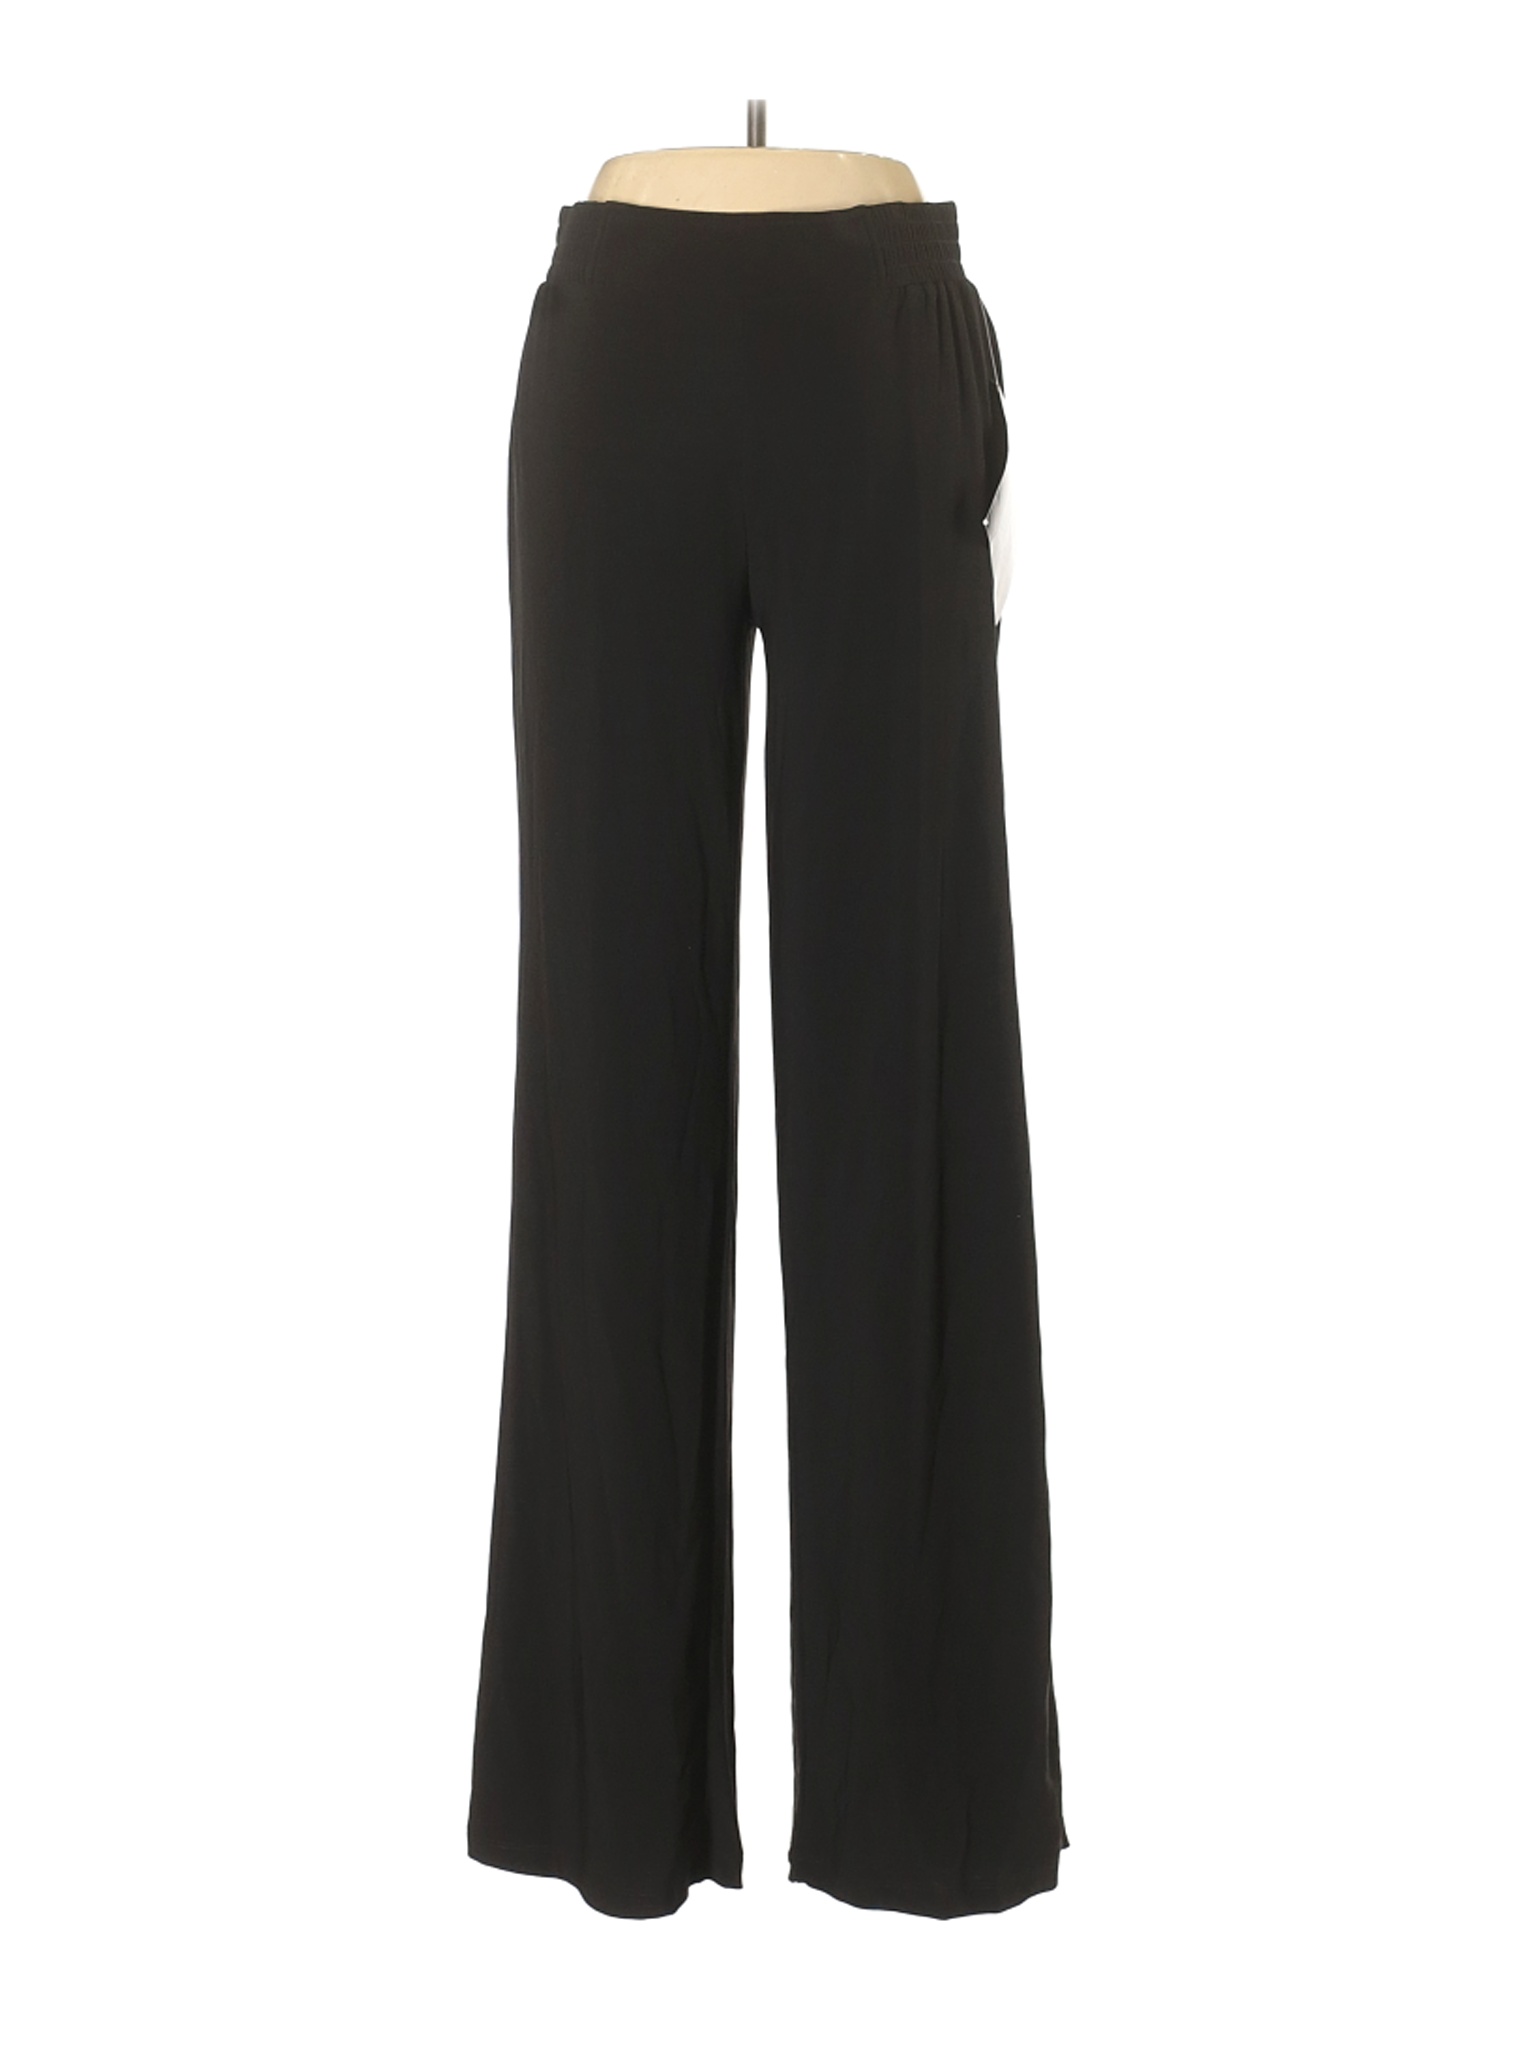 NWT IMAN Women Black Casual Pants M | eBay